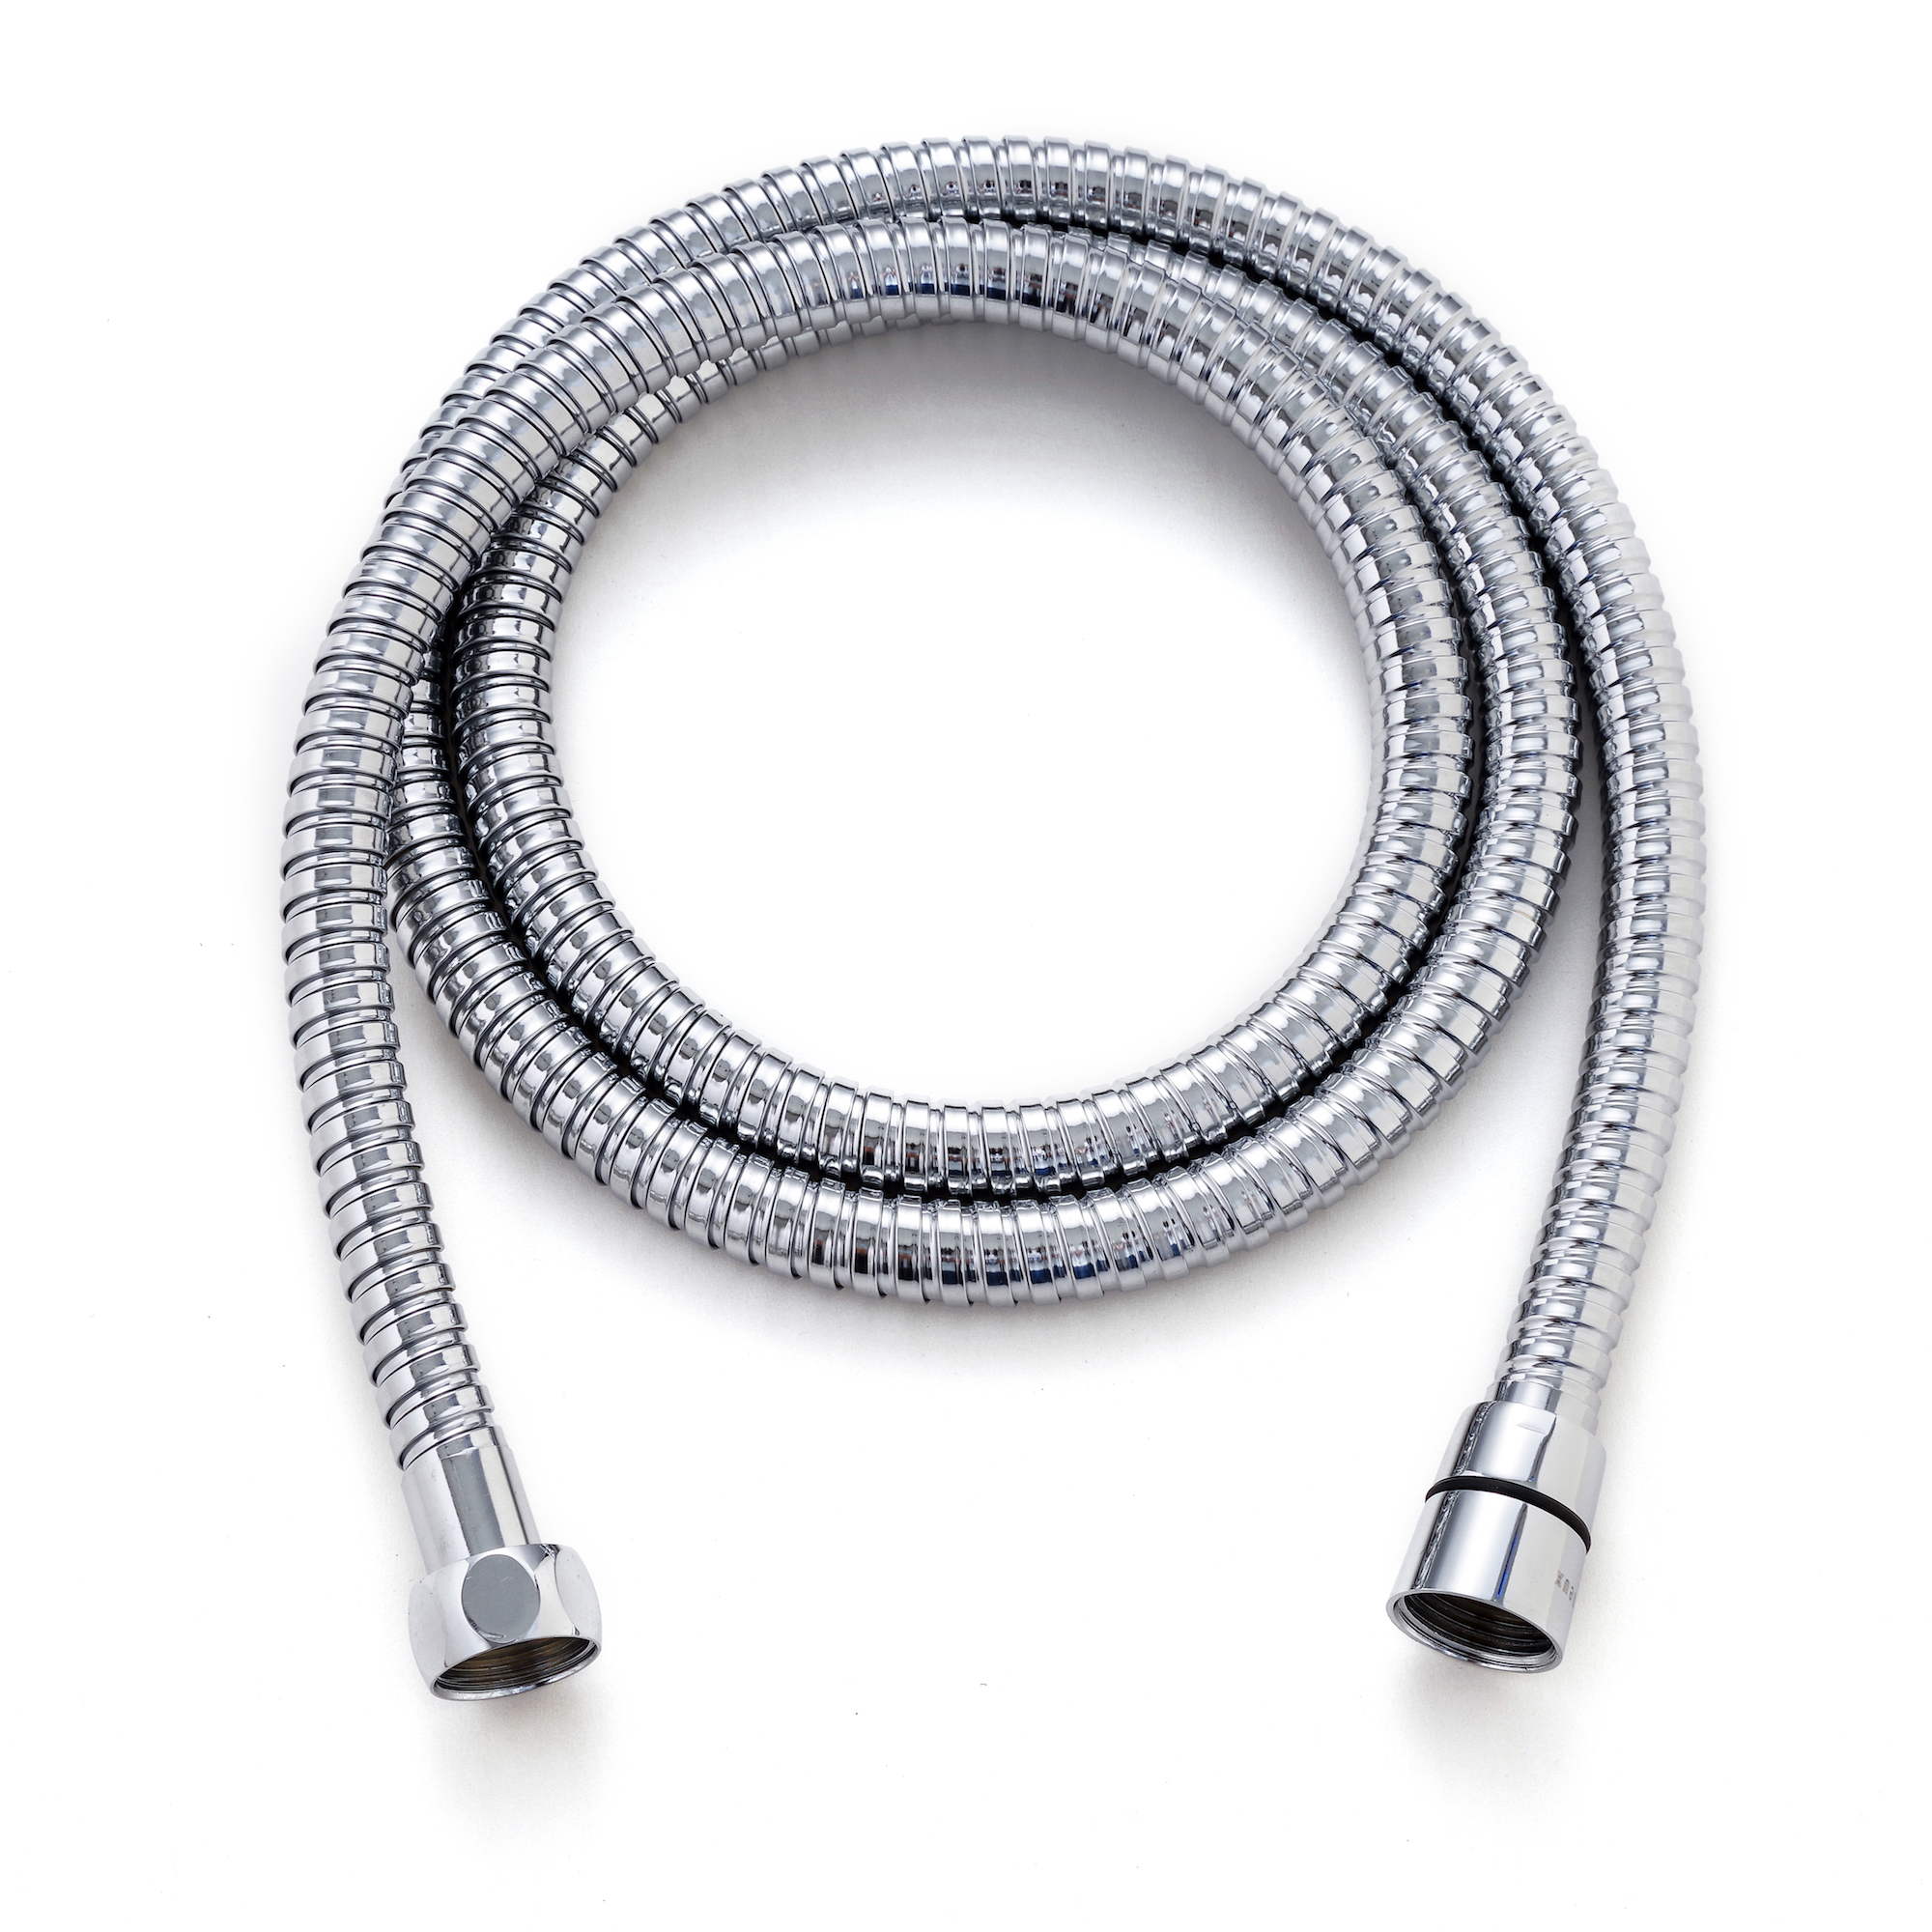 1.5m stainless steel shower hose - Chrome